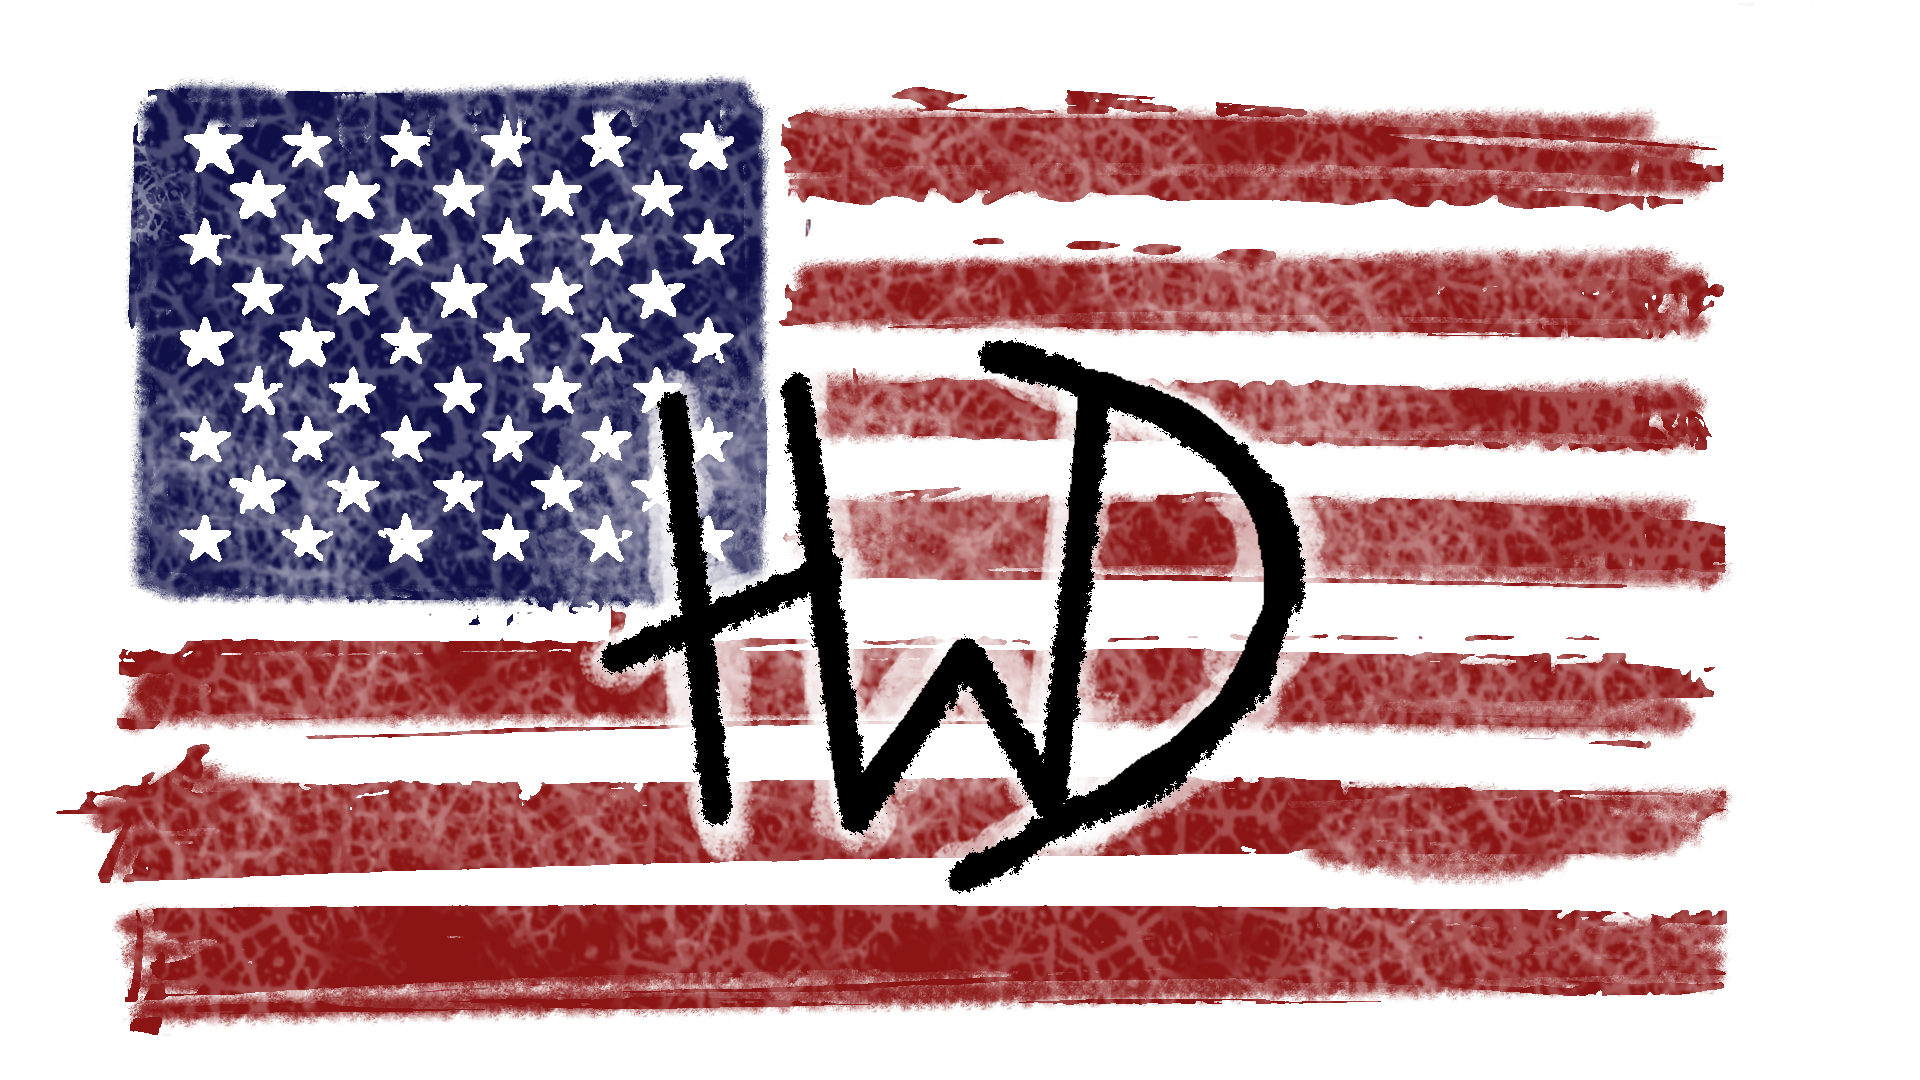 American Flag Cutting Board and Serving Tray – Hodgdon Wood Designs LLC